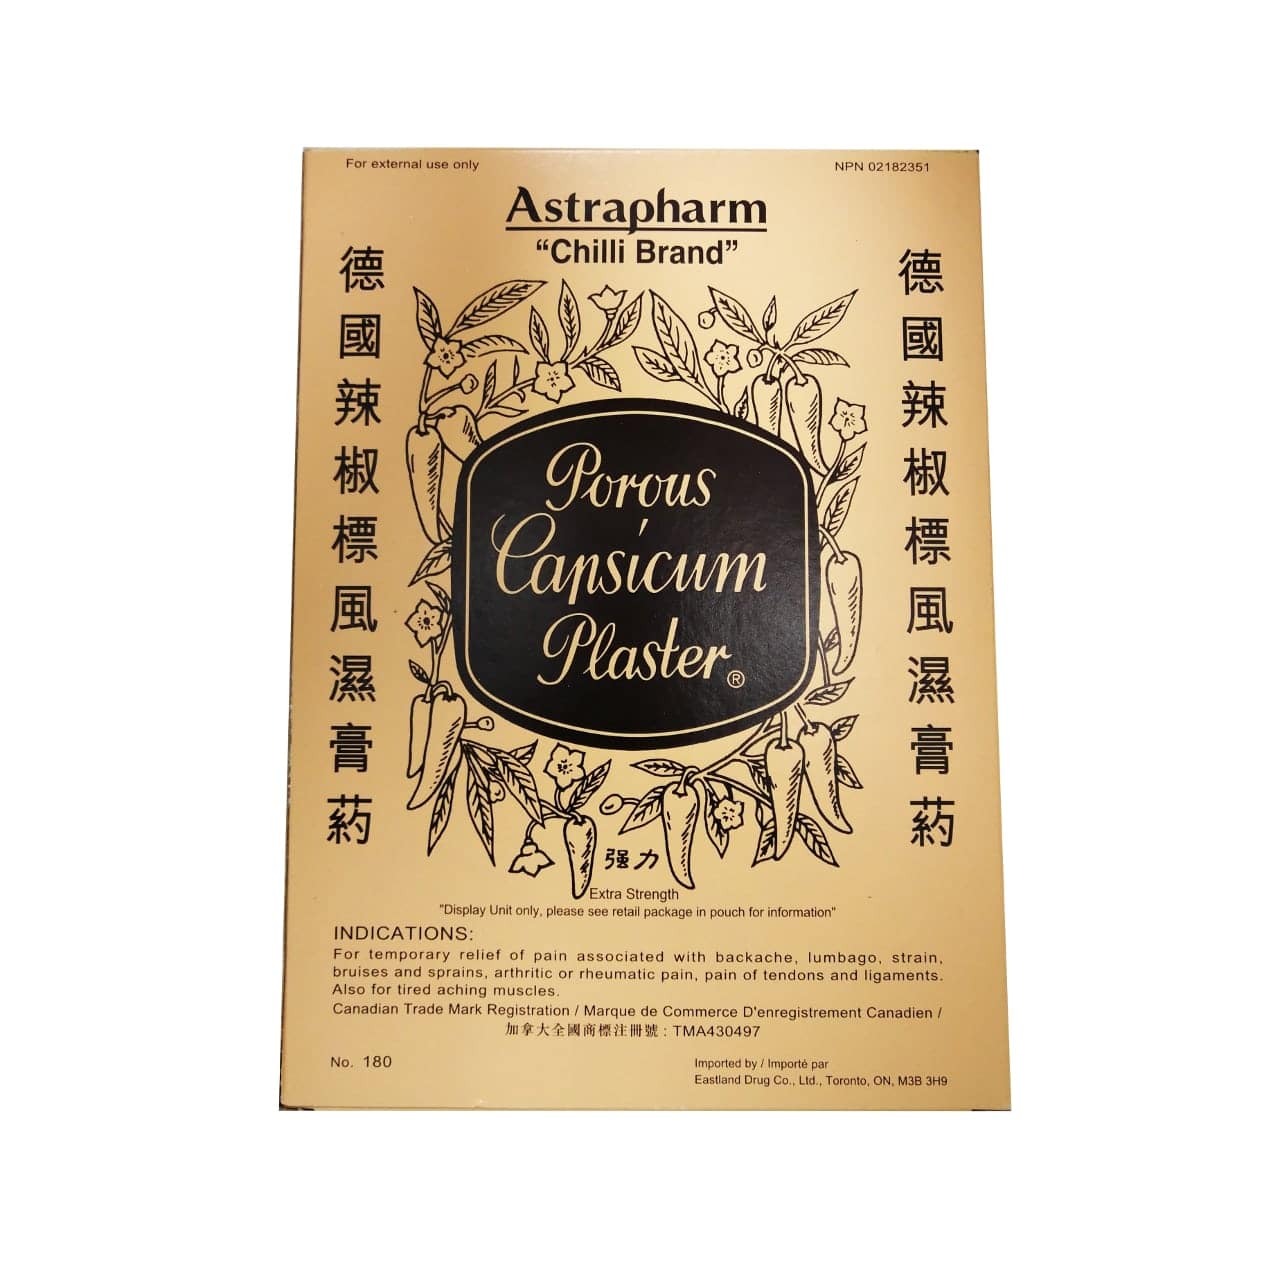 Astrapharm Porous Capsicum Plaster 24 pack cover in English.